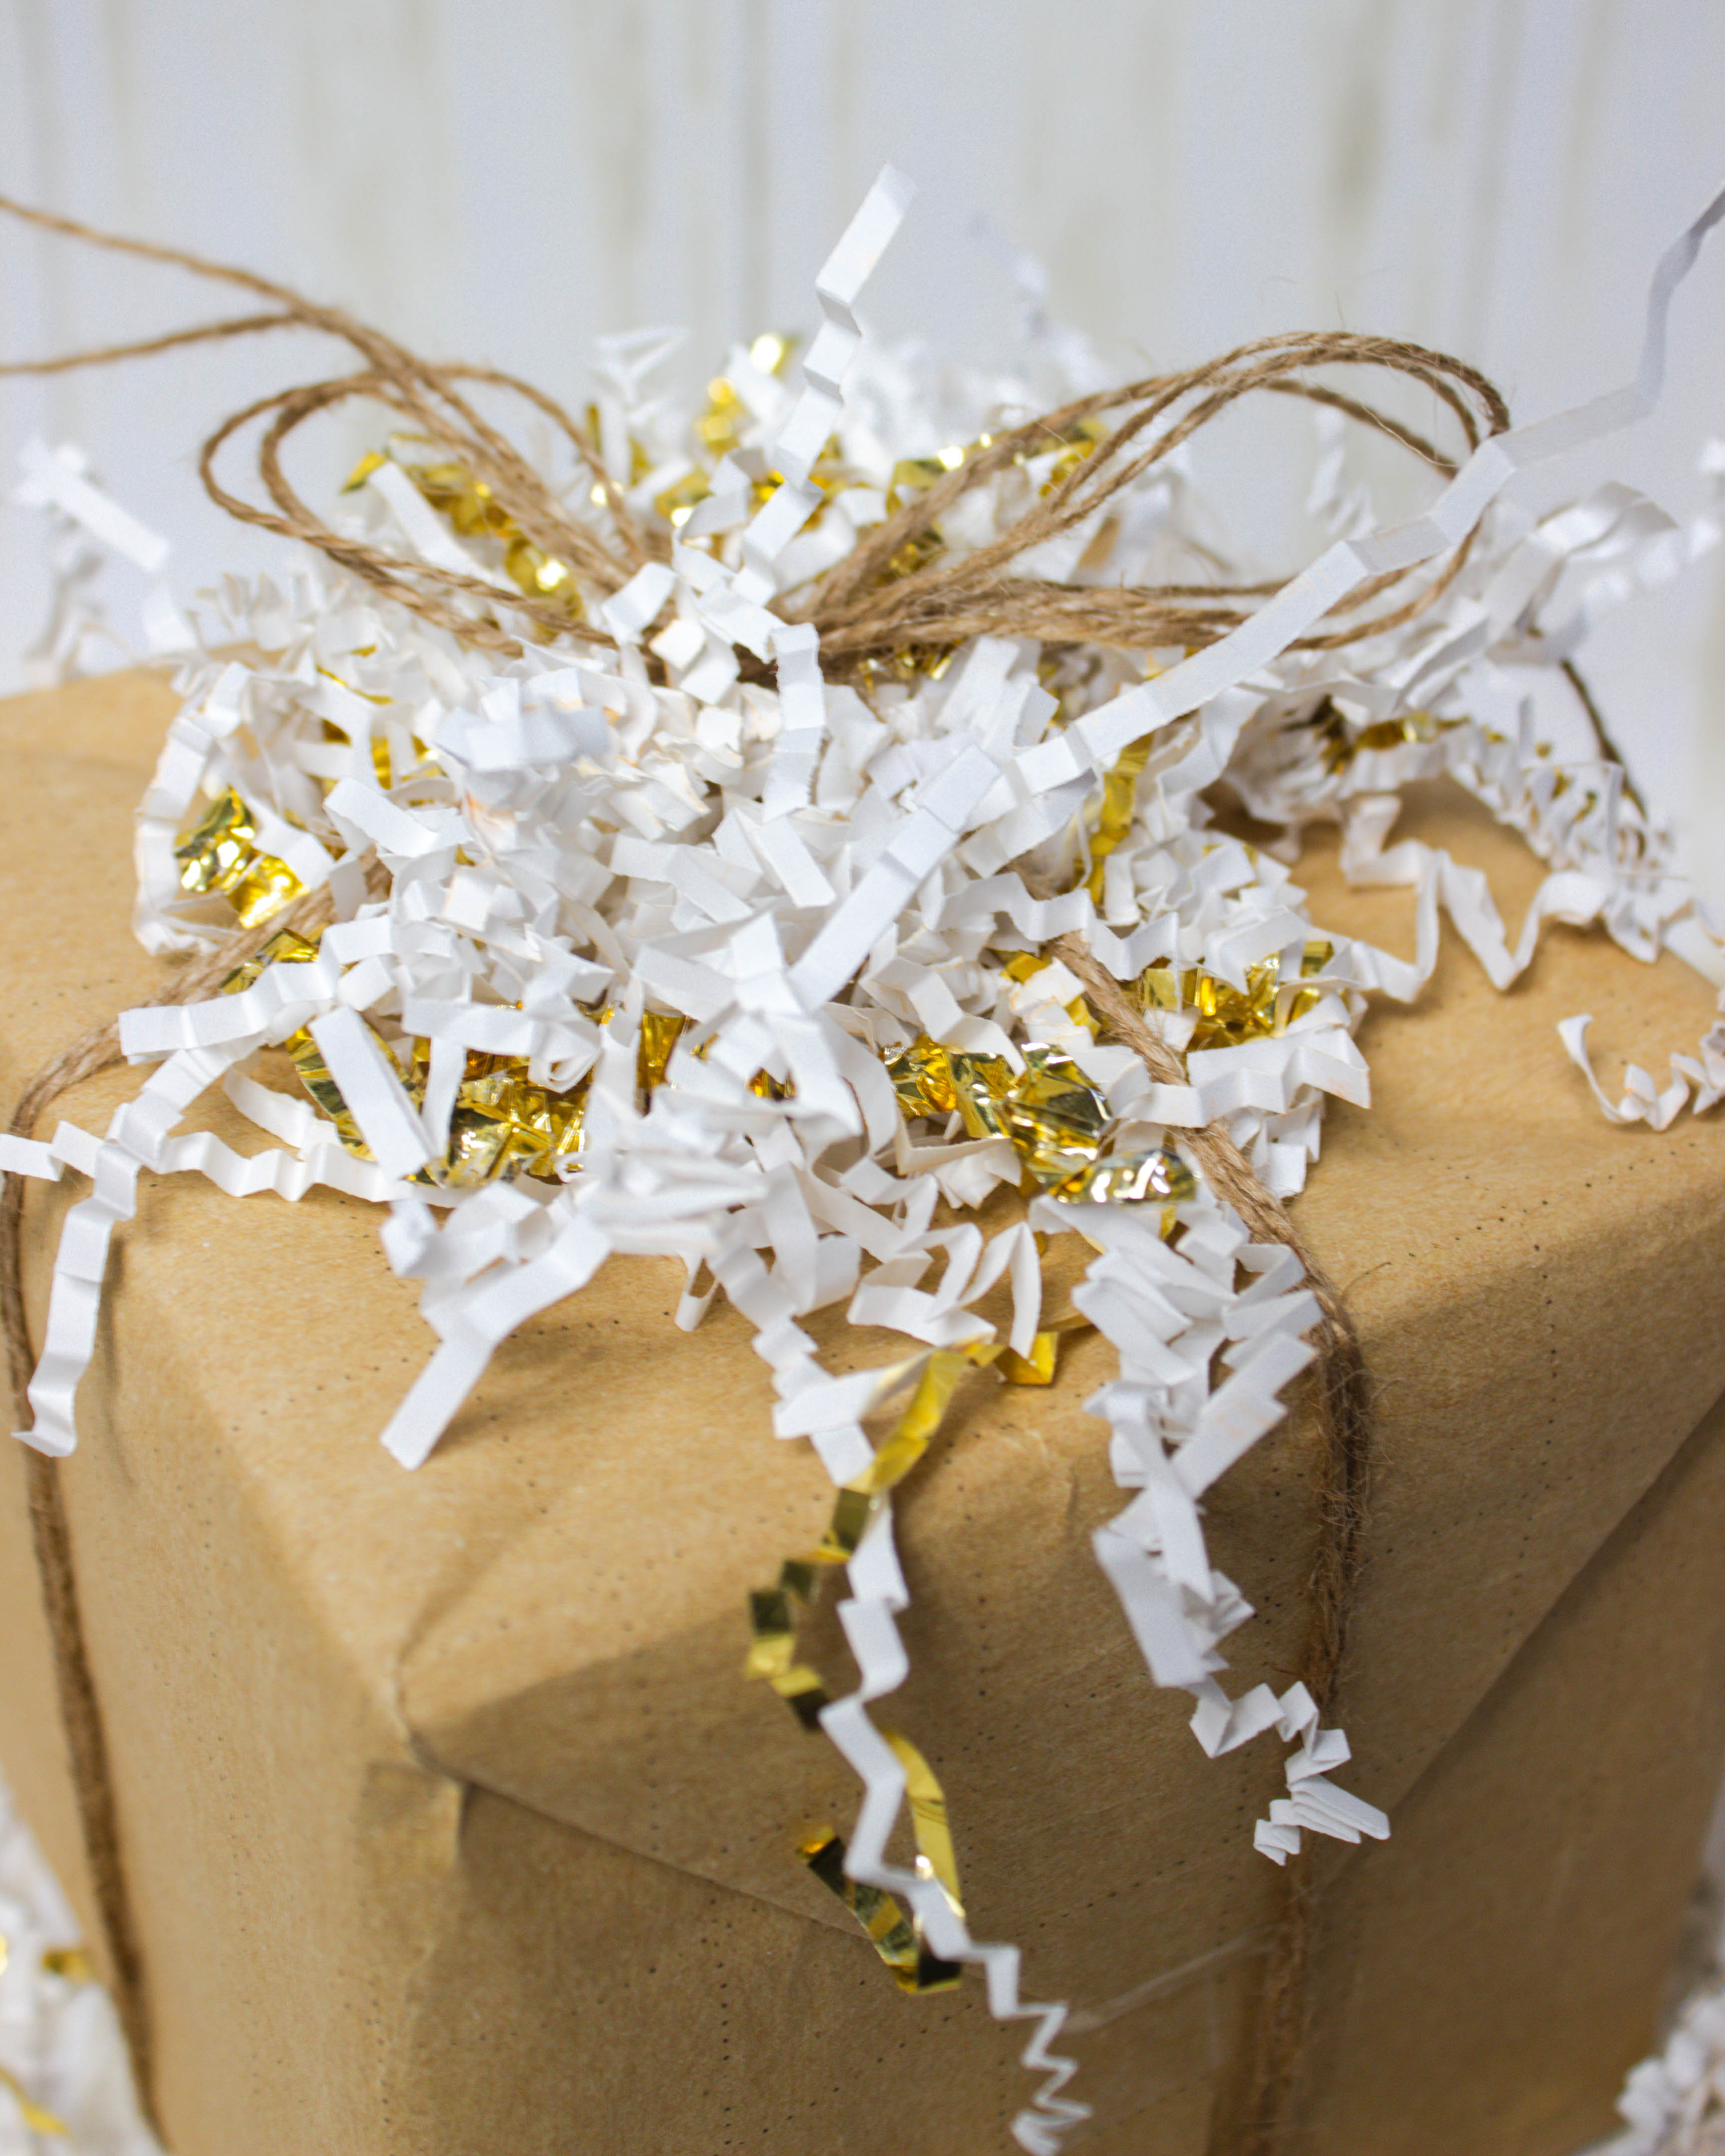 Crinkle Cut Paper Shred Filler (1 LB) for Gift Wrapping & Basket Filling - White & Gold